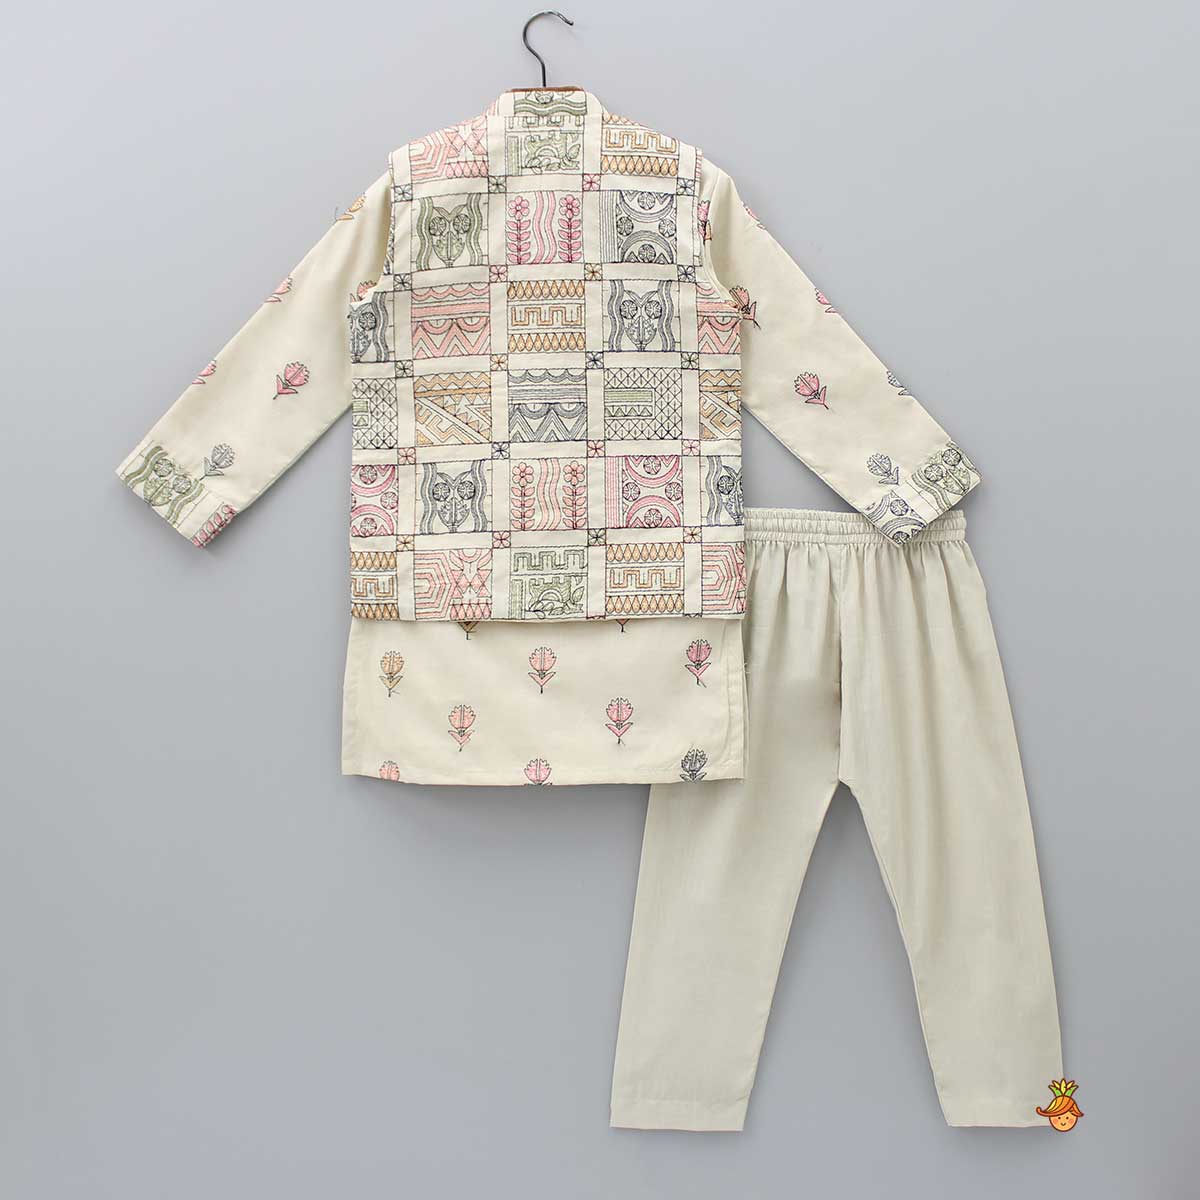 Beige Mandarin Collar Kurta With Stylish Cut Out Jacket And Pyjama